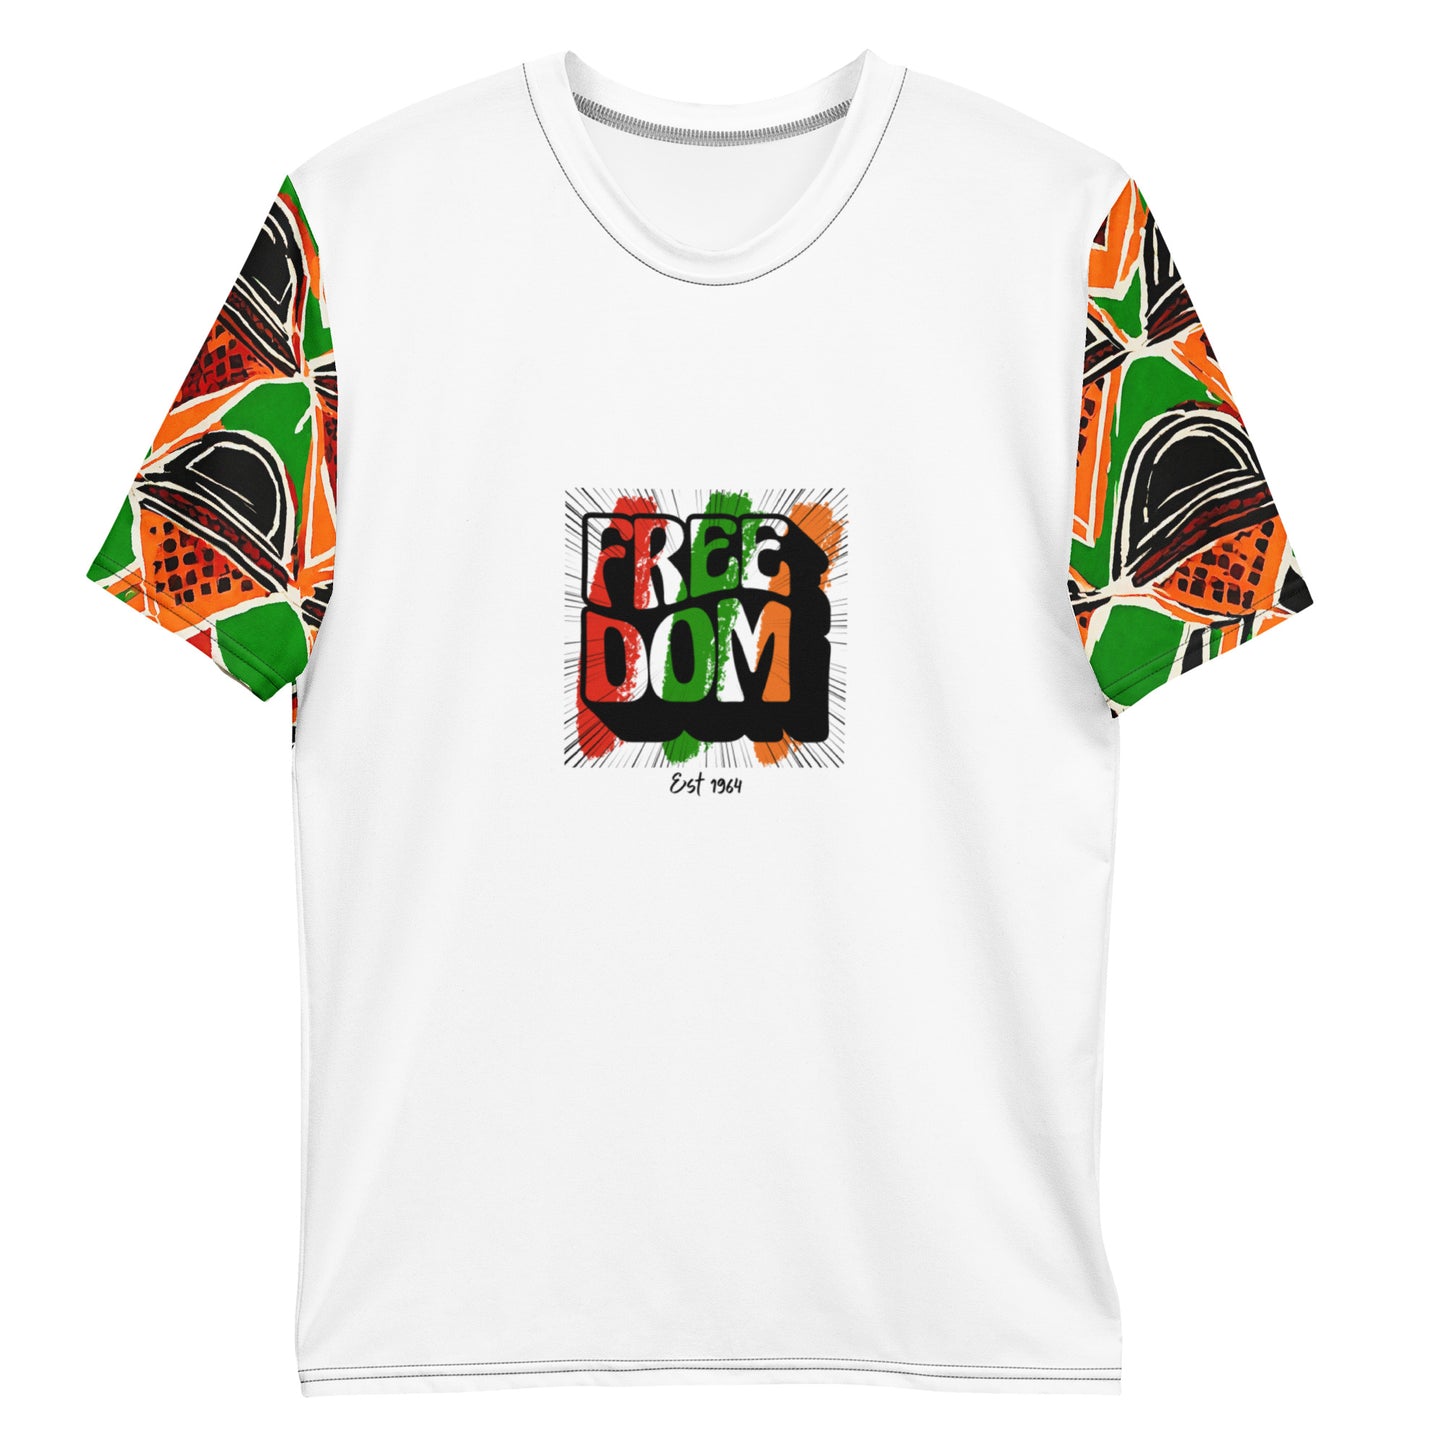 Men's Zambia Freedom Afro Sleeve Print t-shirt